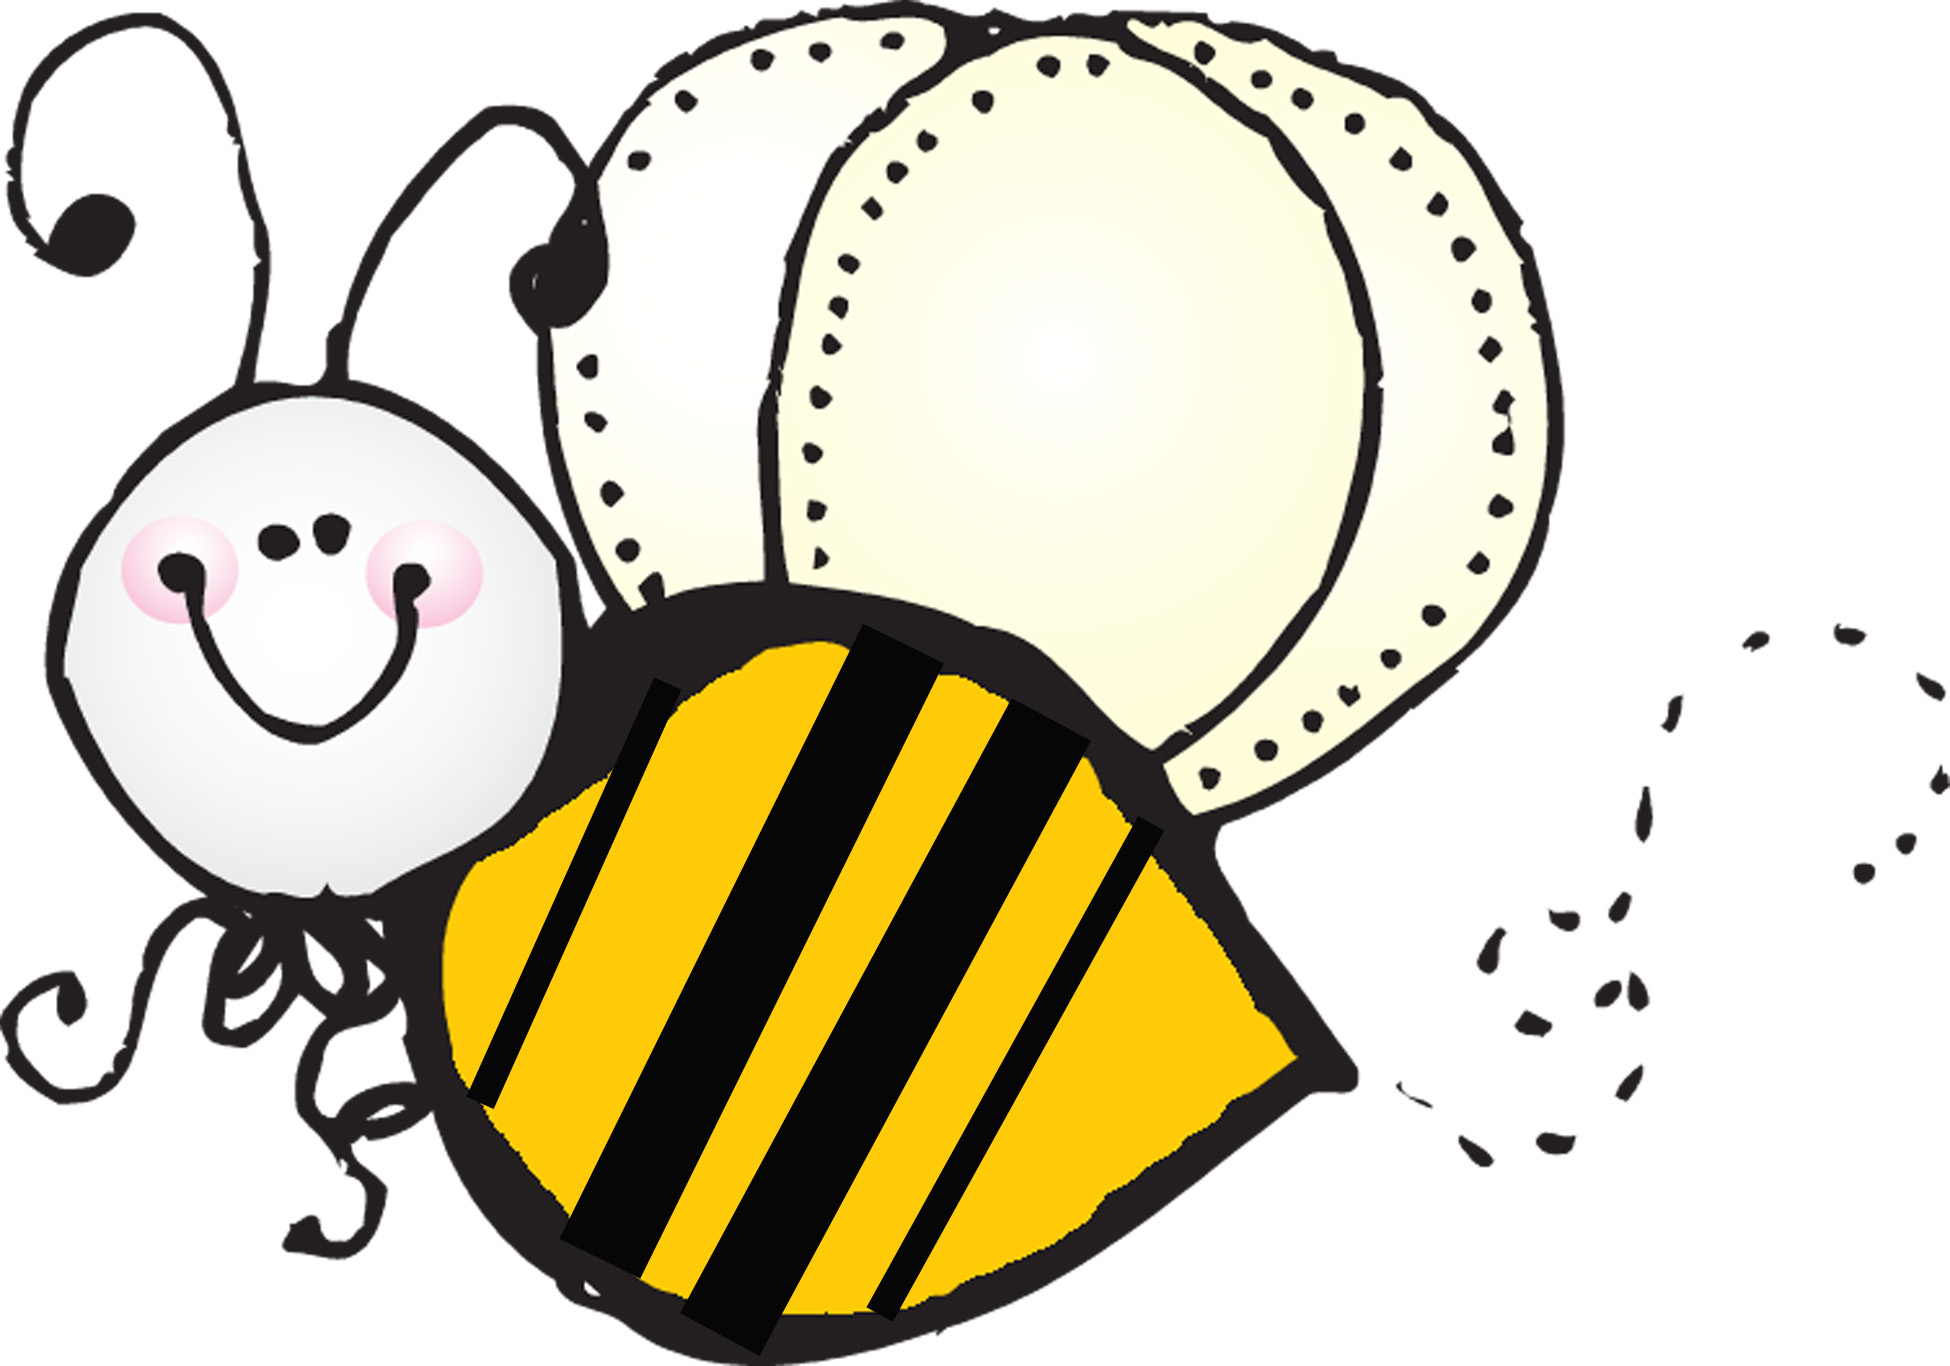 honey bee clip art images free - photo #49